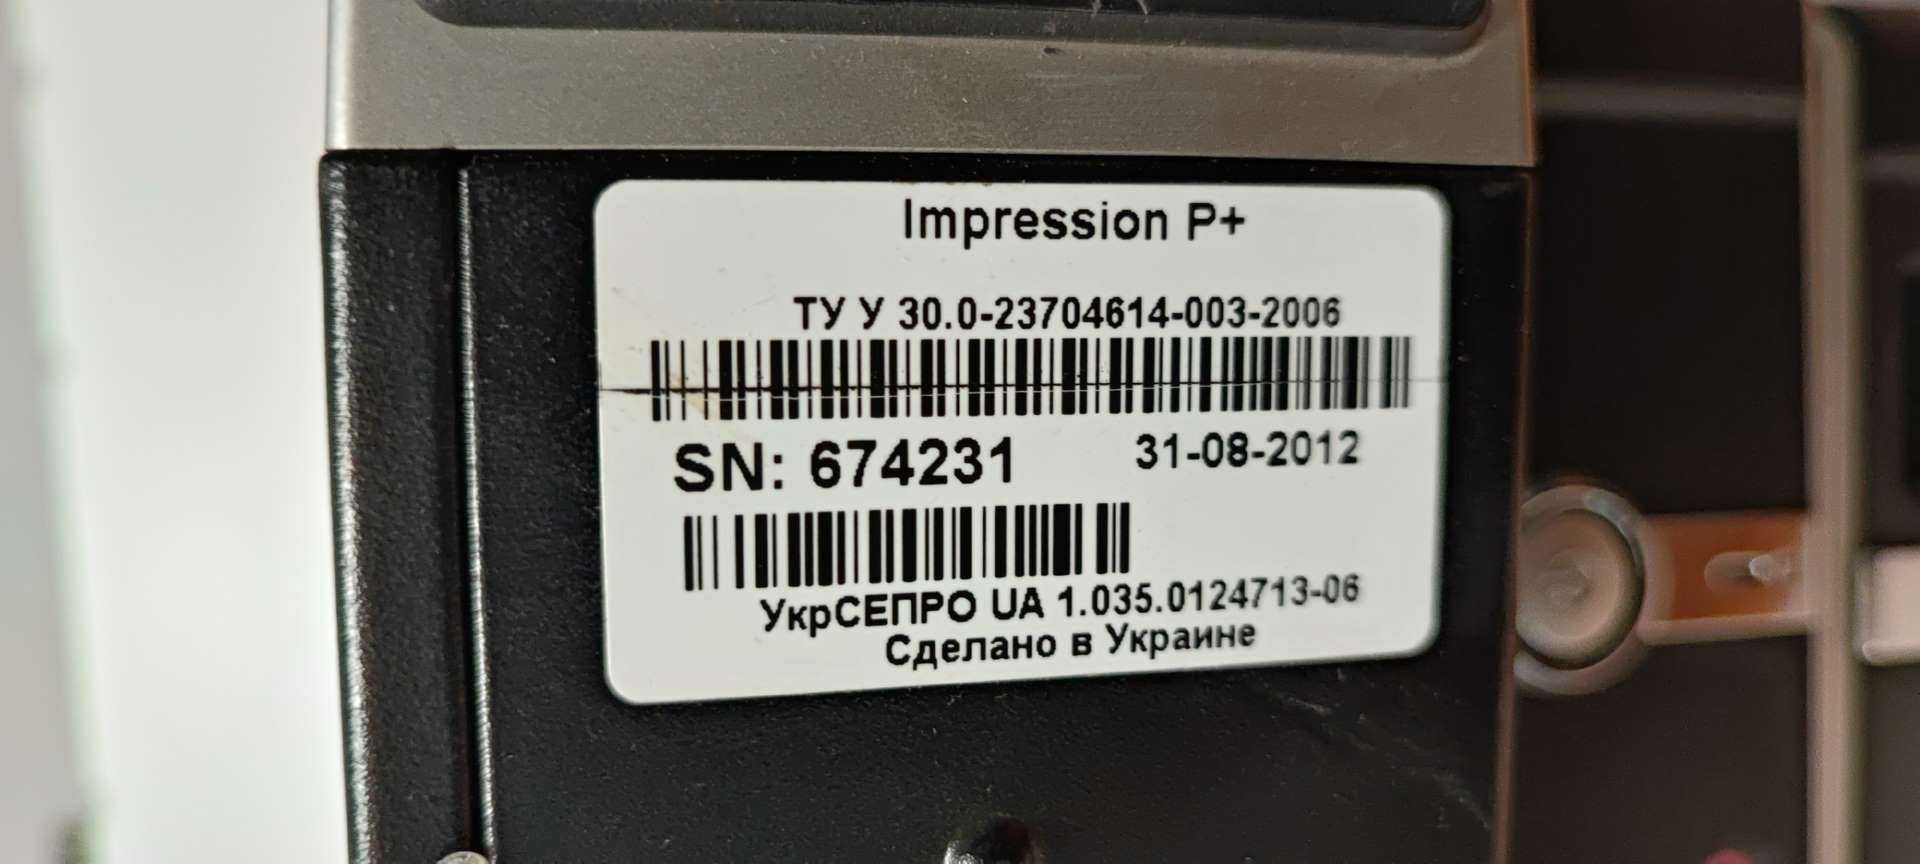 Impression P+ тонкий клиент на базе Intel Atom сертифицирован УкрСЕПРО